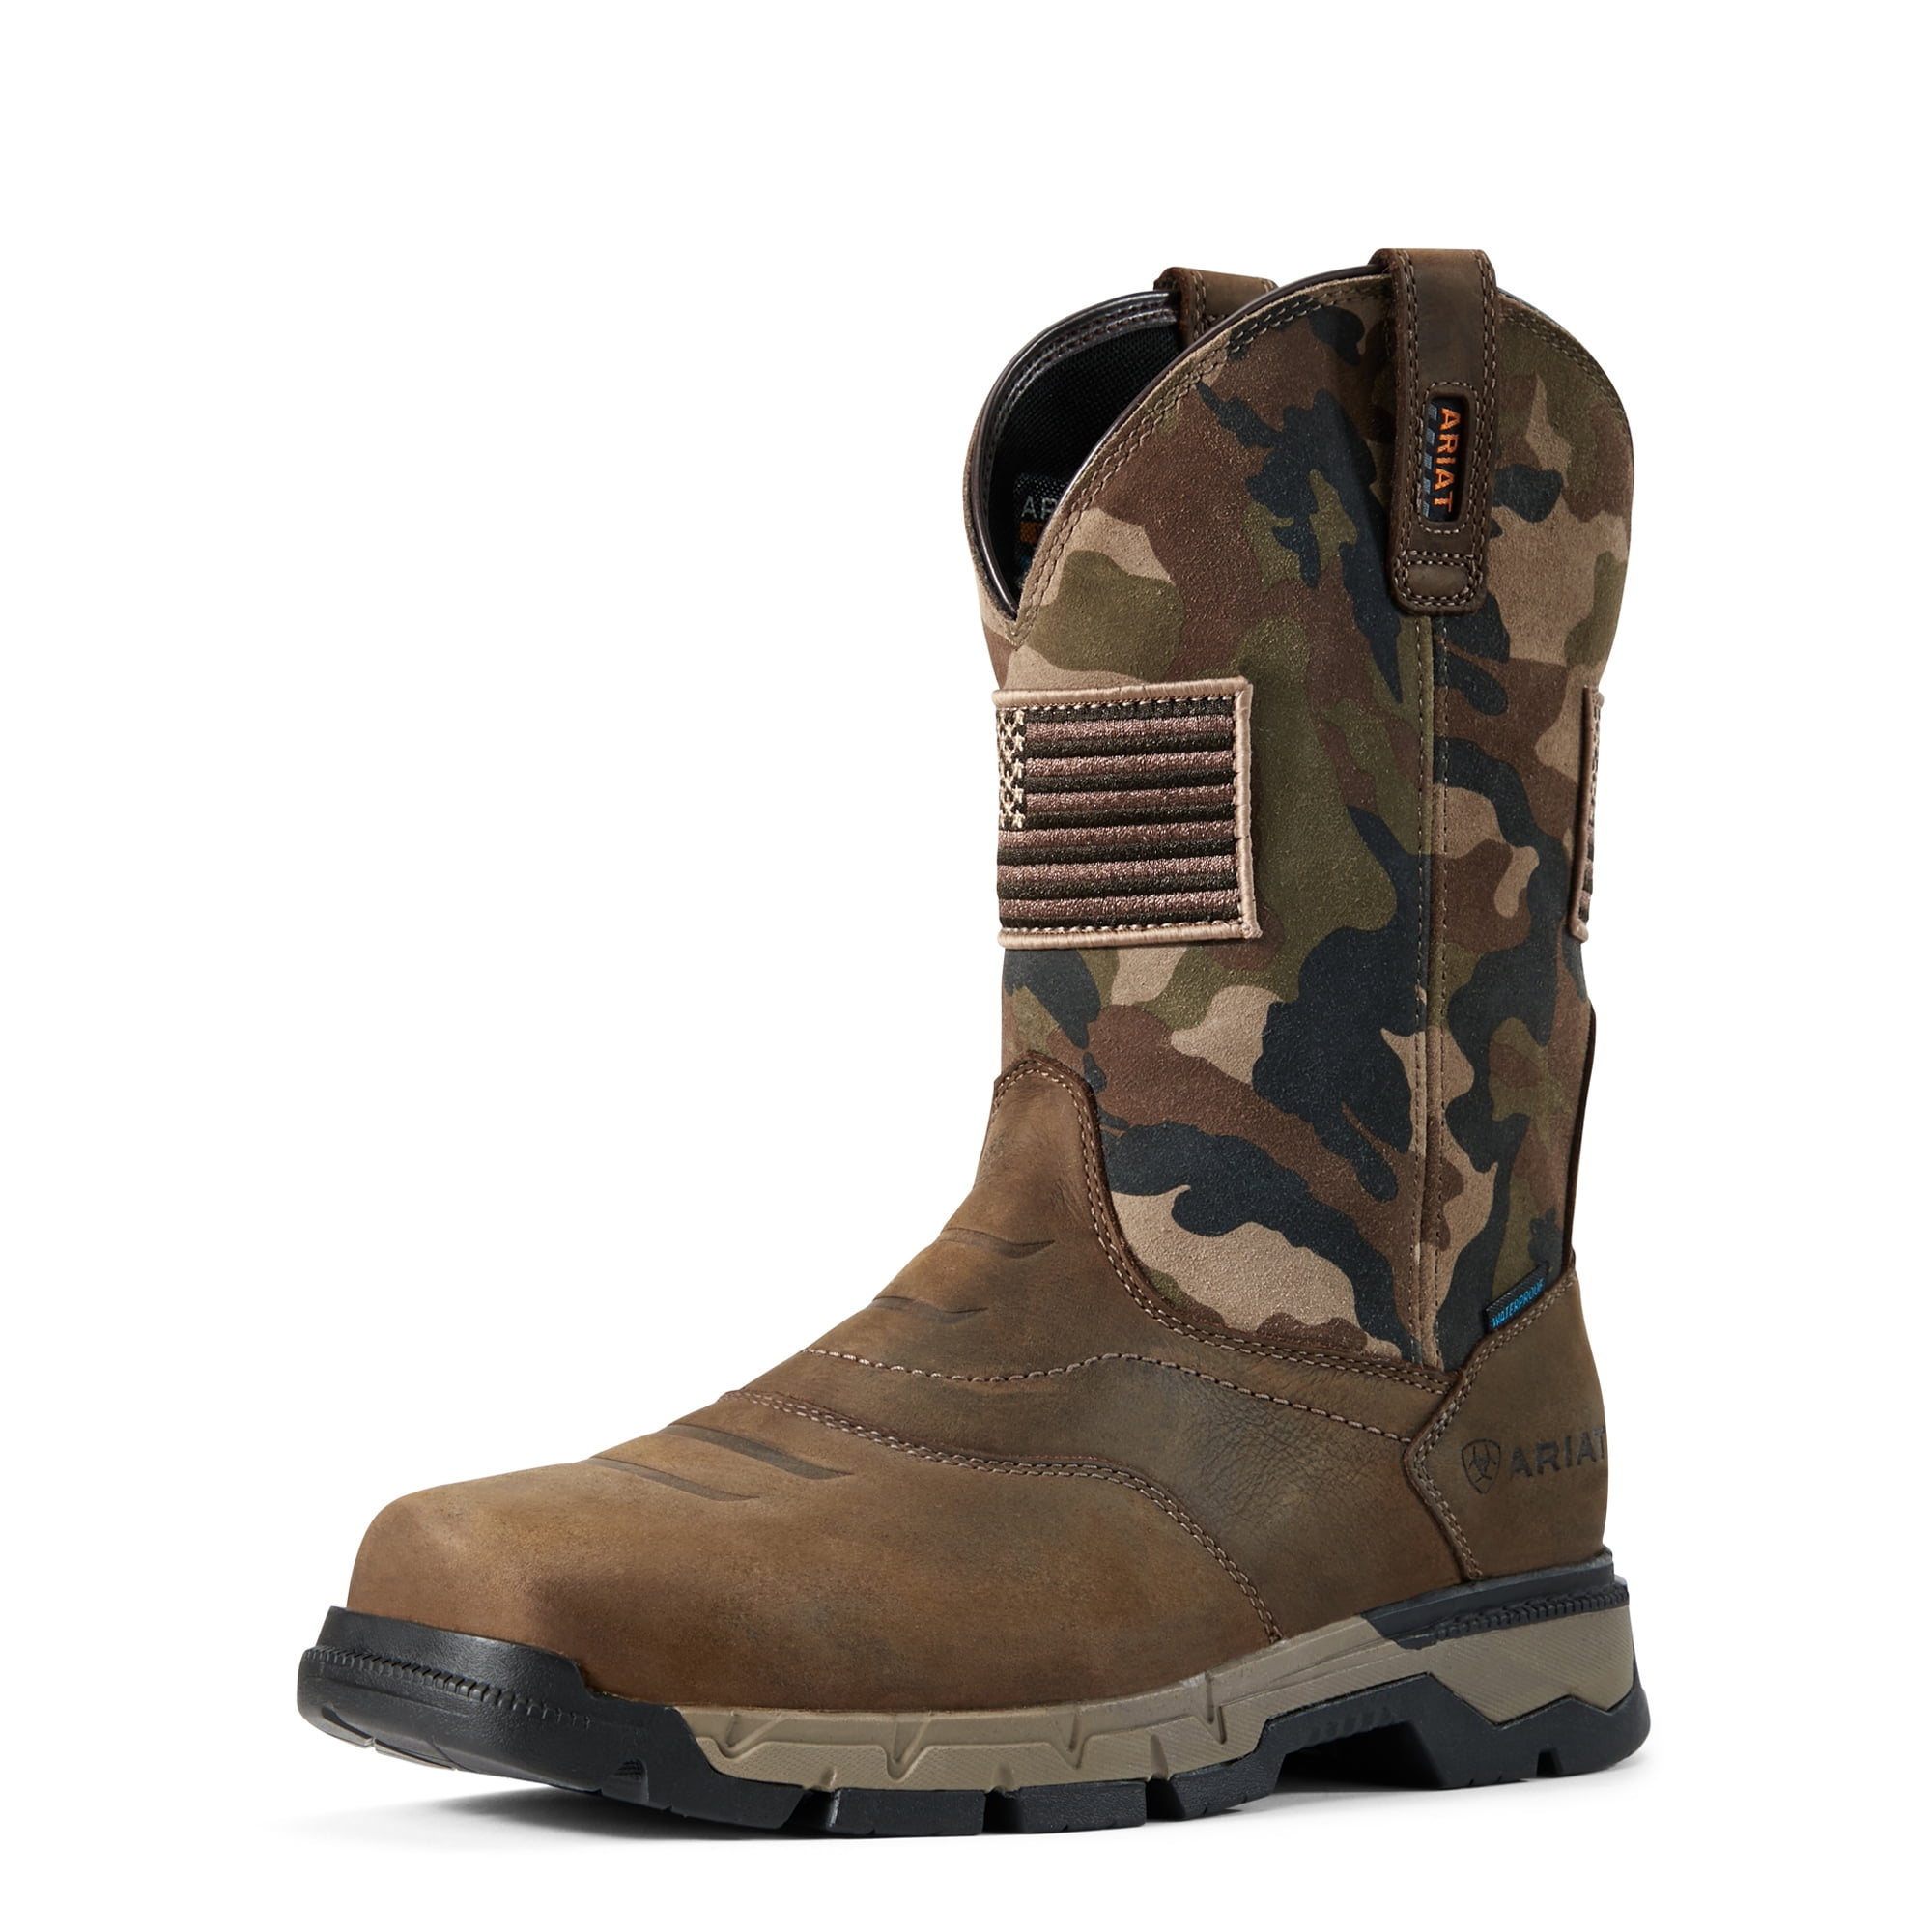 waterproof western work boots